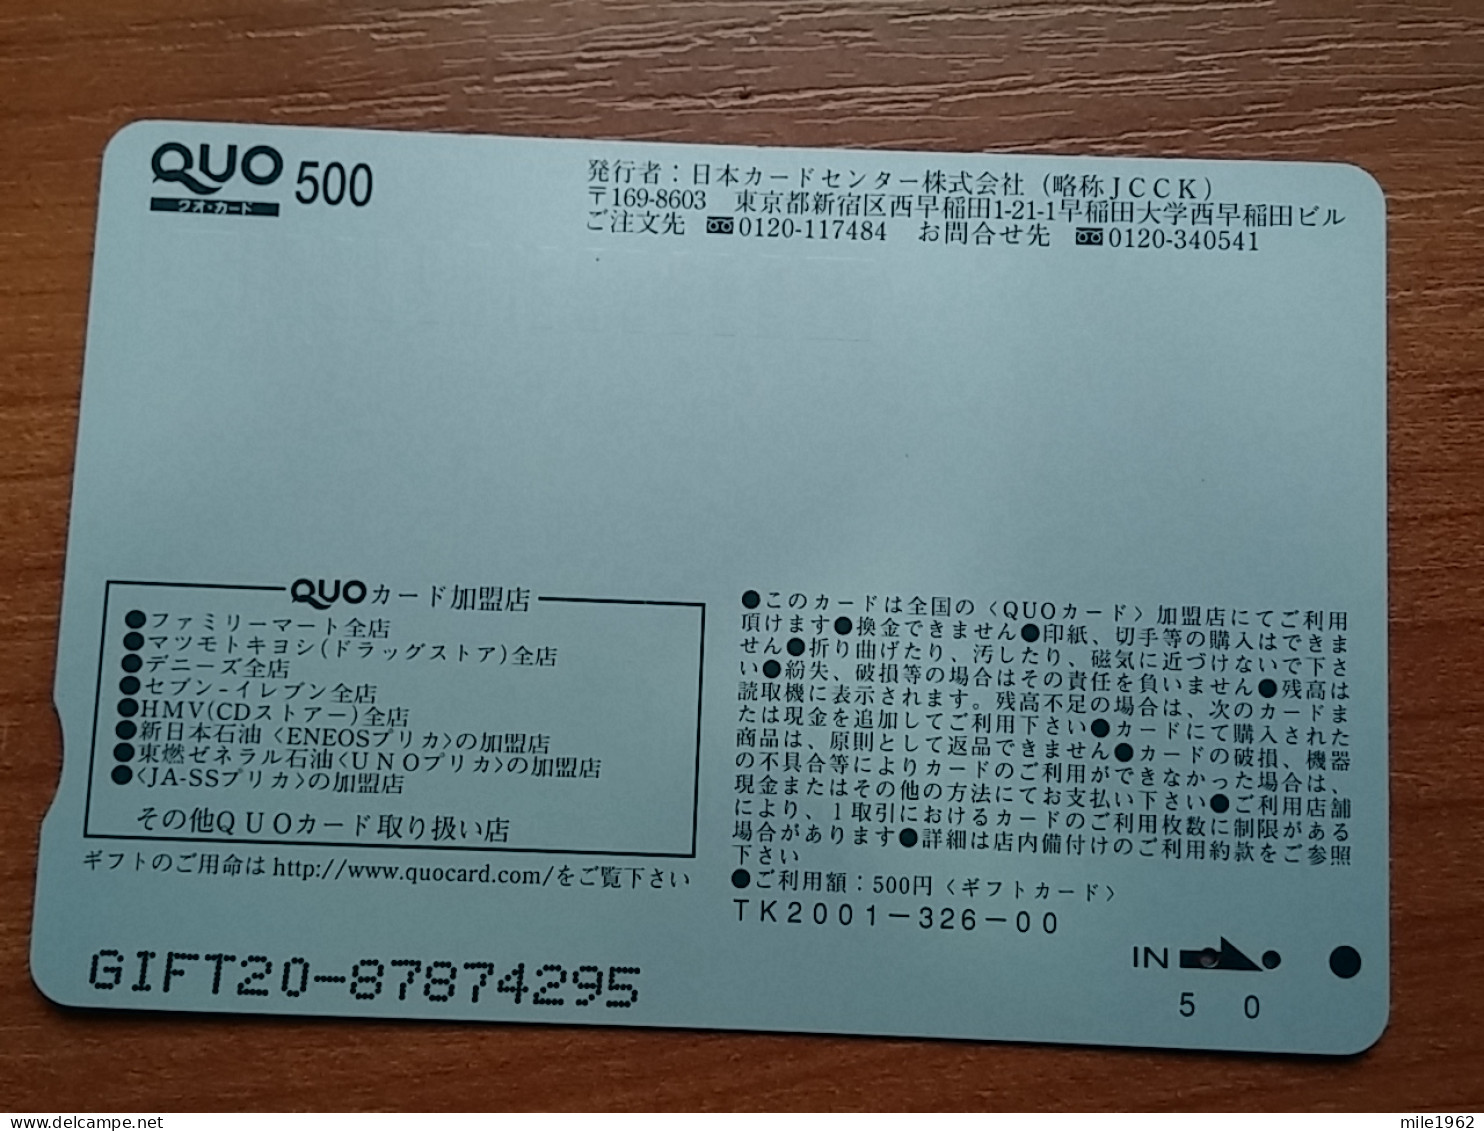 T-401 - JAPAN, Japon, Nipon, Carte Prepayee, Prepaid Card, CAT, CHAT,  - Katten